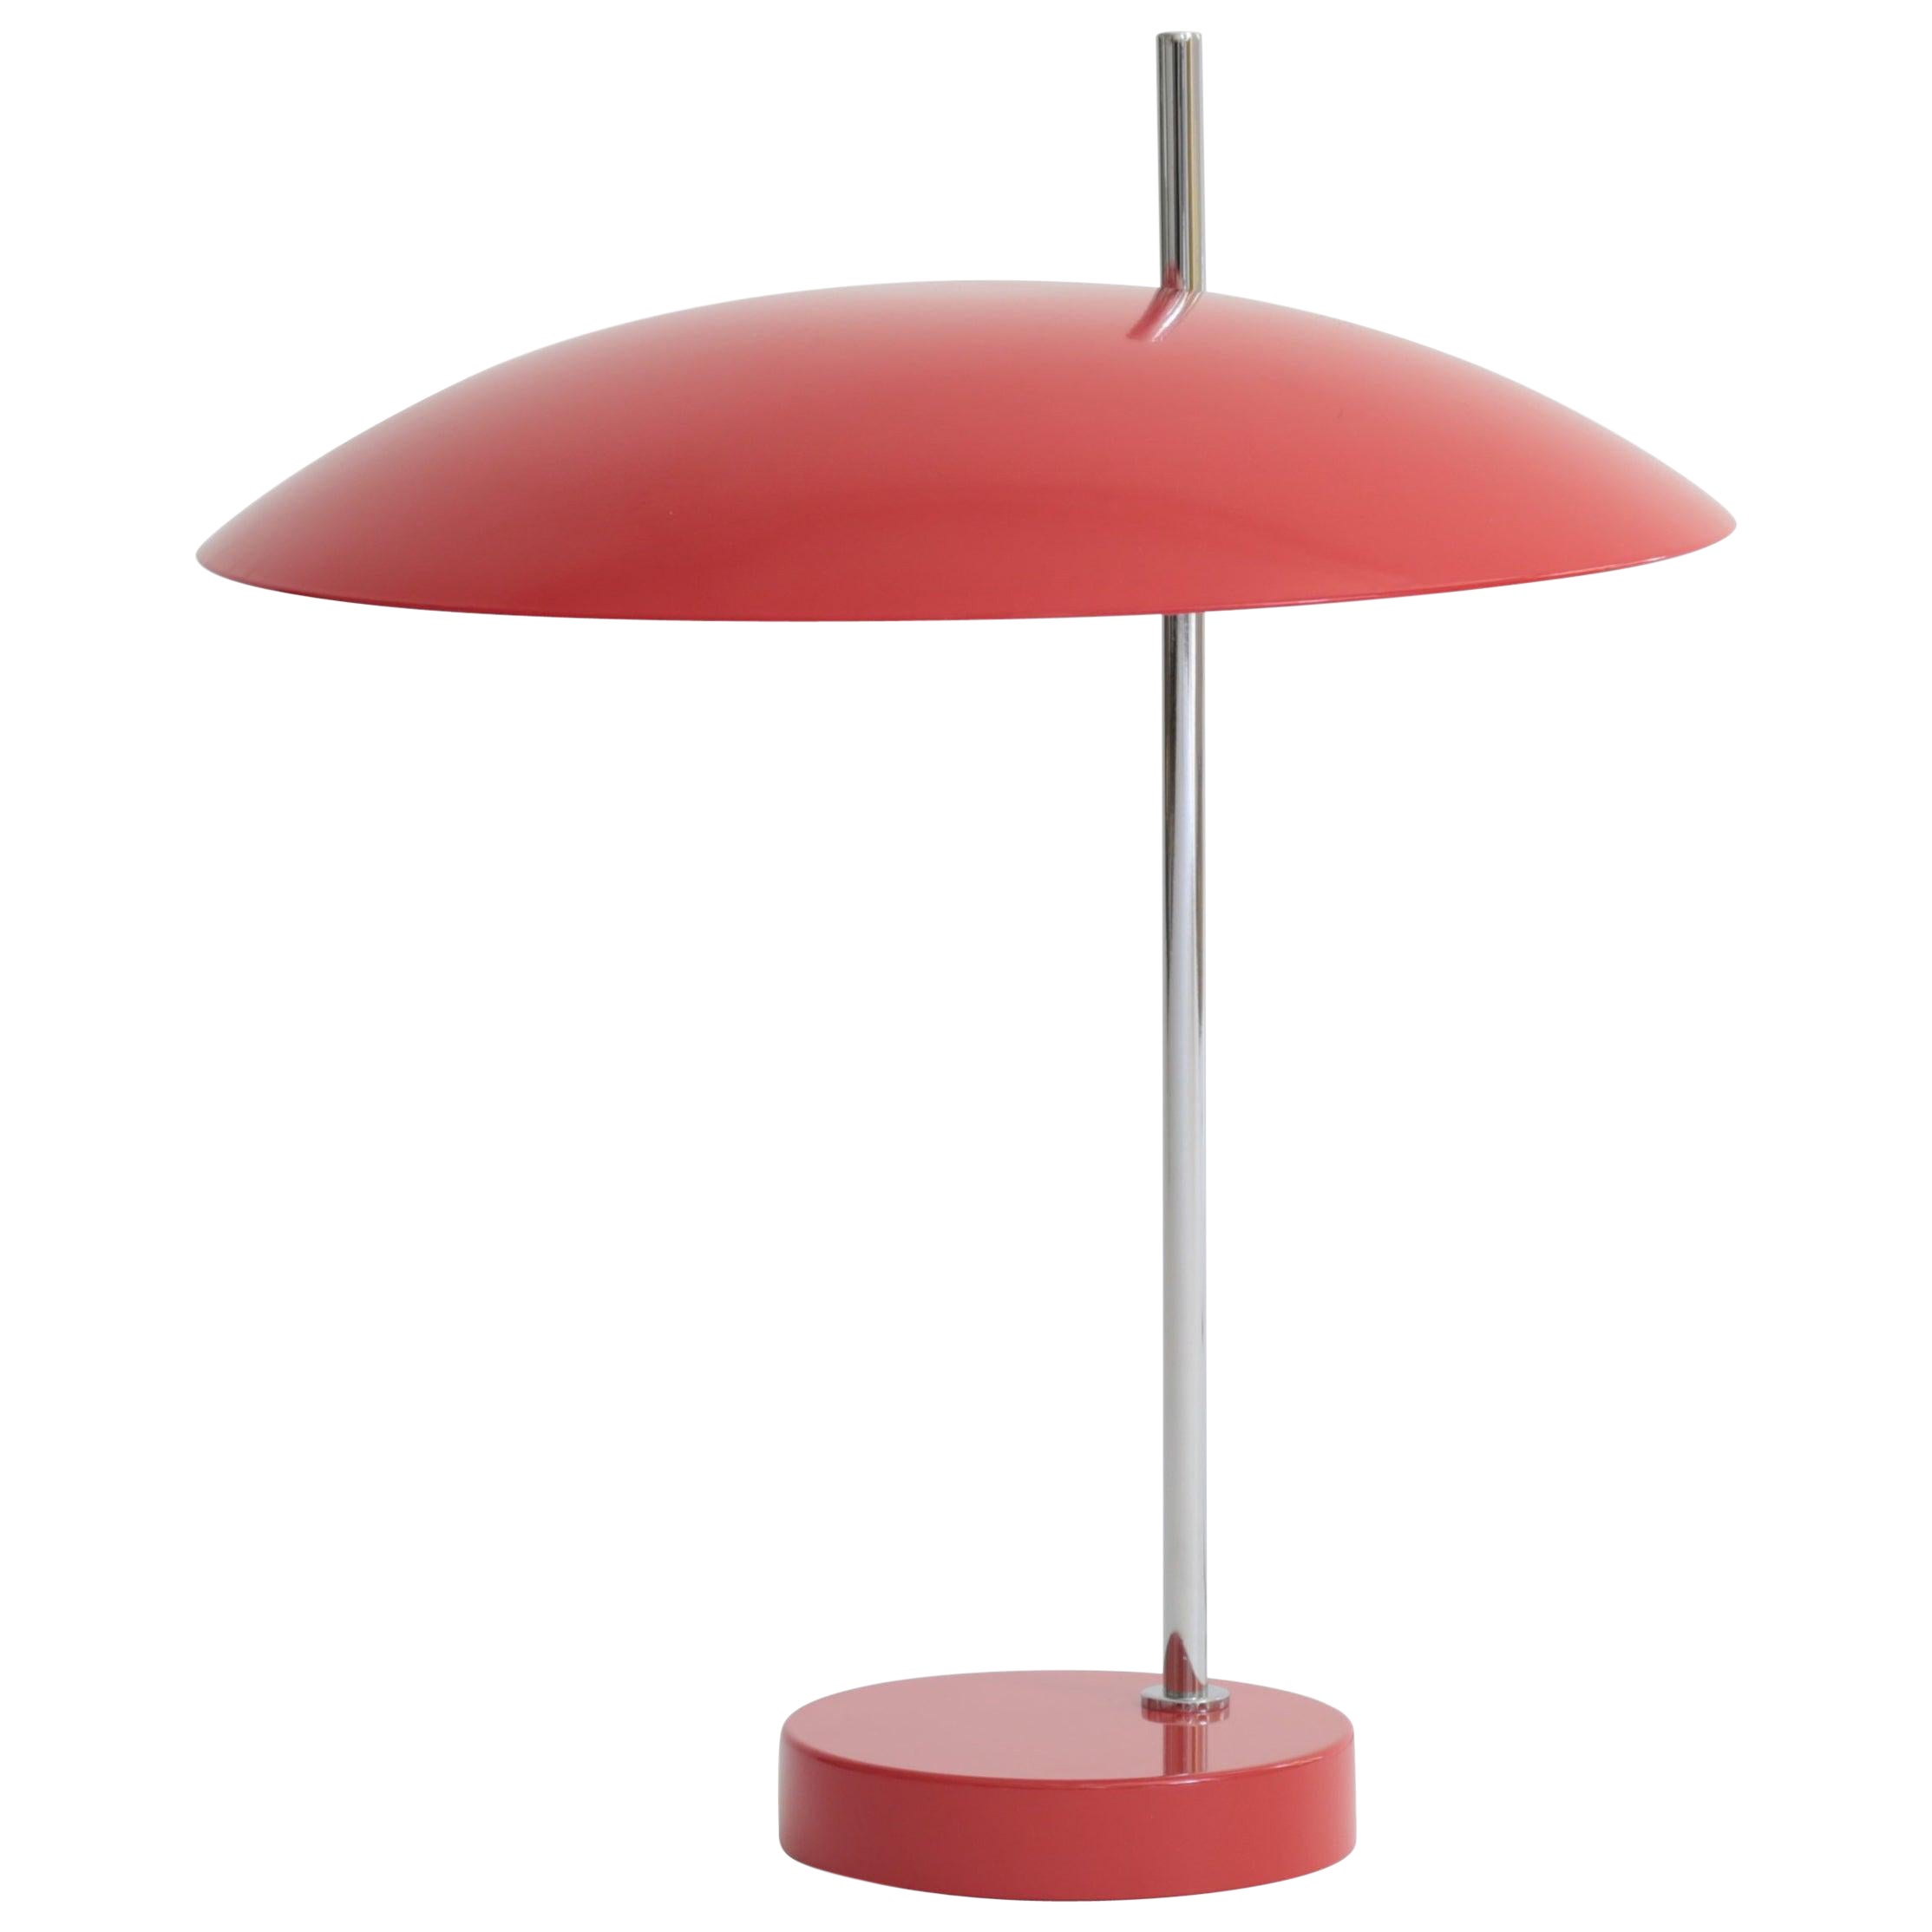 Pierre Disderot Model #1013 Table Lamp in Red and Chrome for Disderot, France For Sale